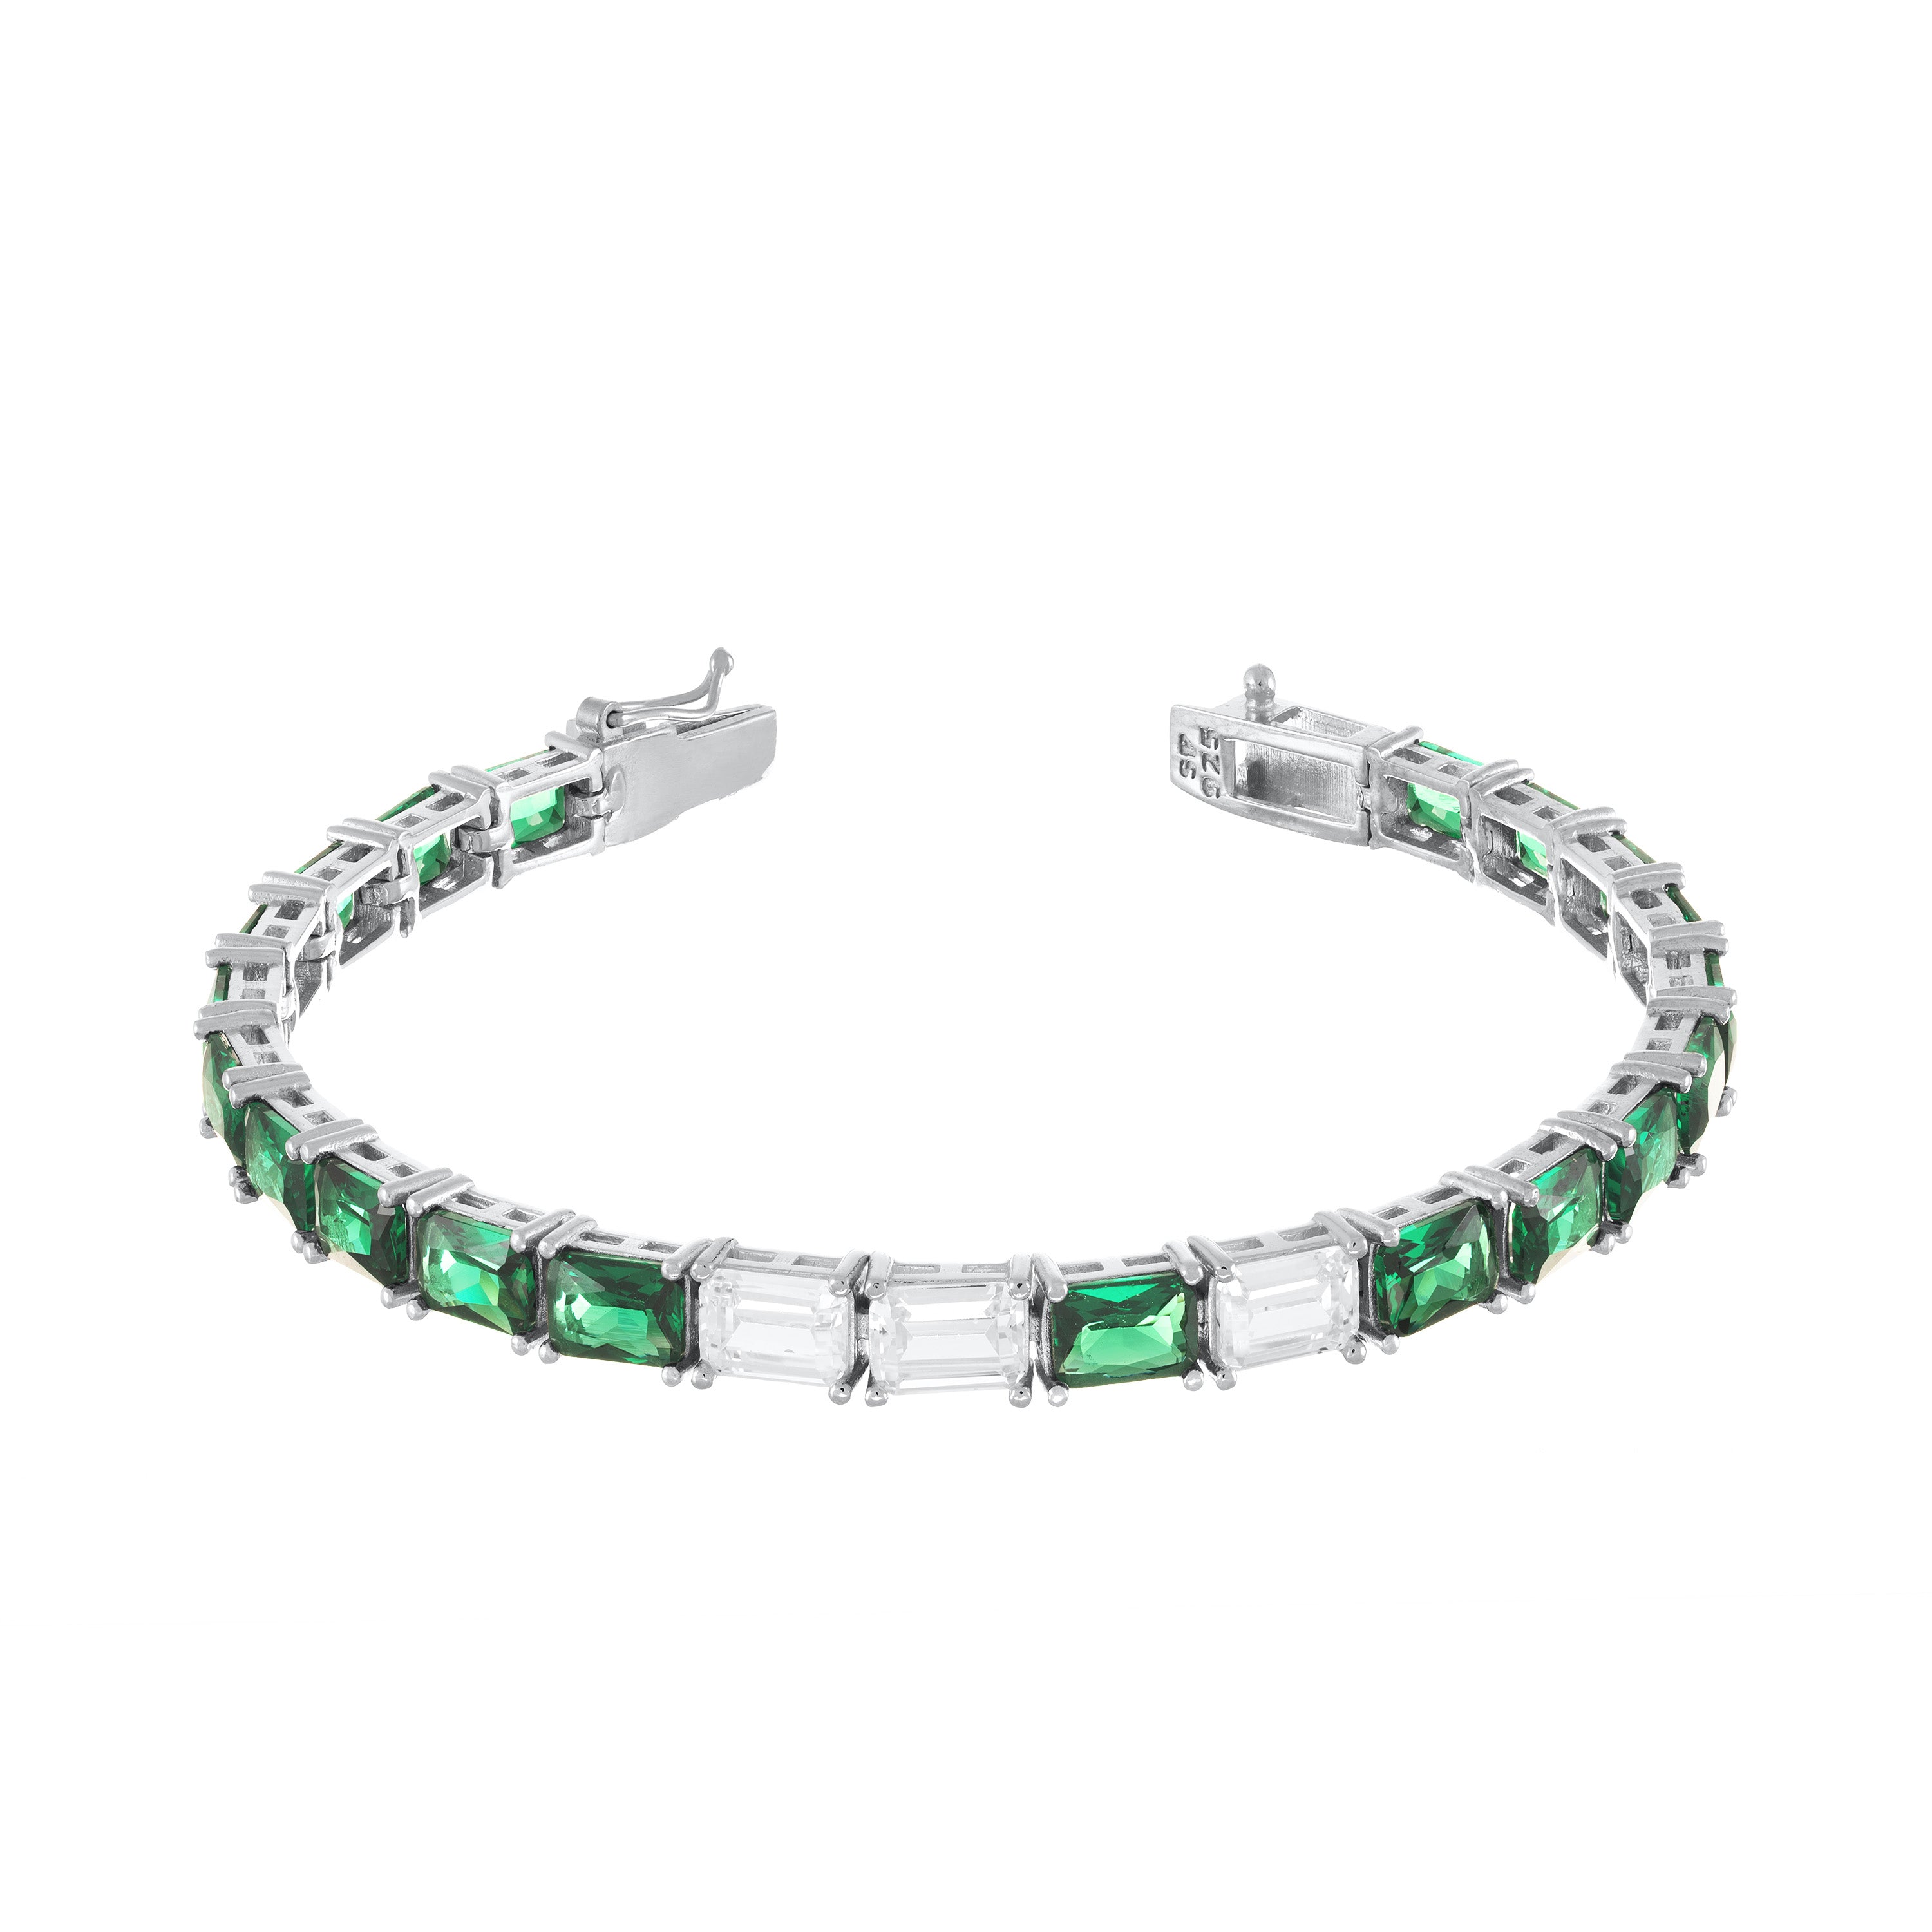 Cubic Zirconia Emerald Cut Tennis Bracelet With Box Clasp